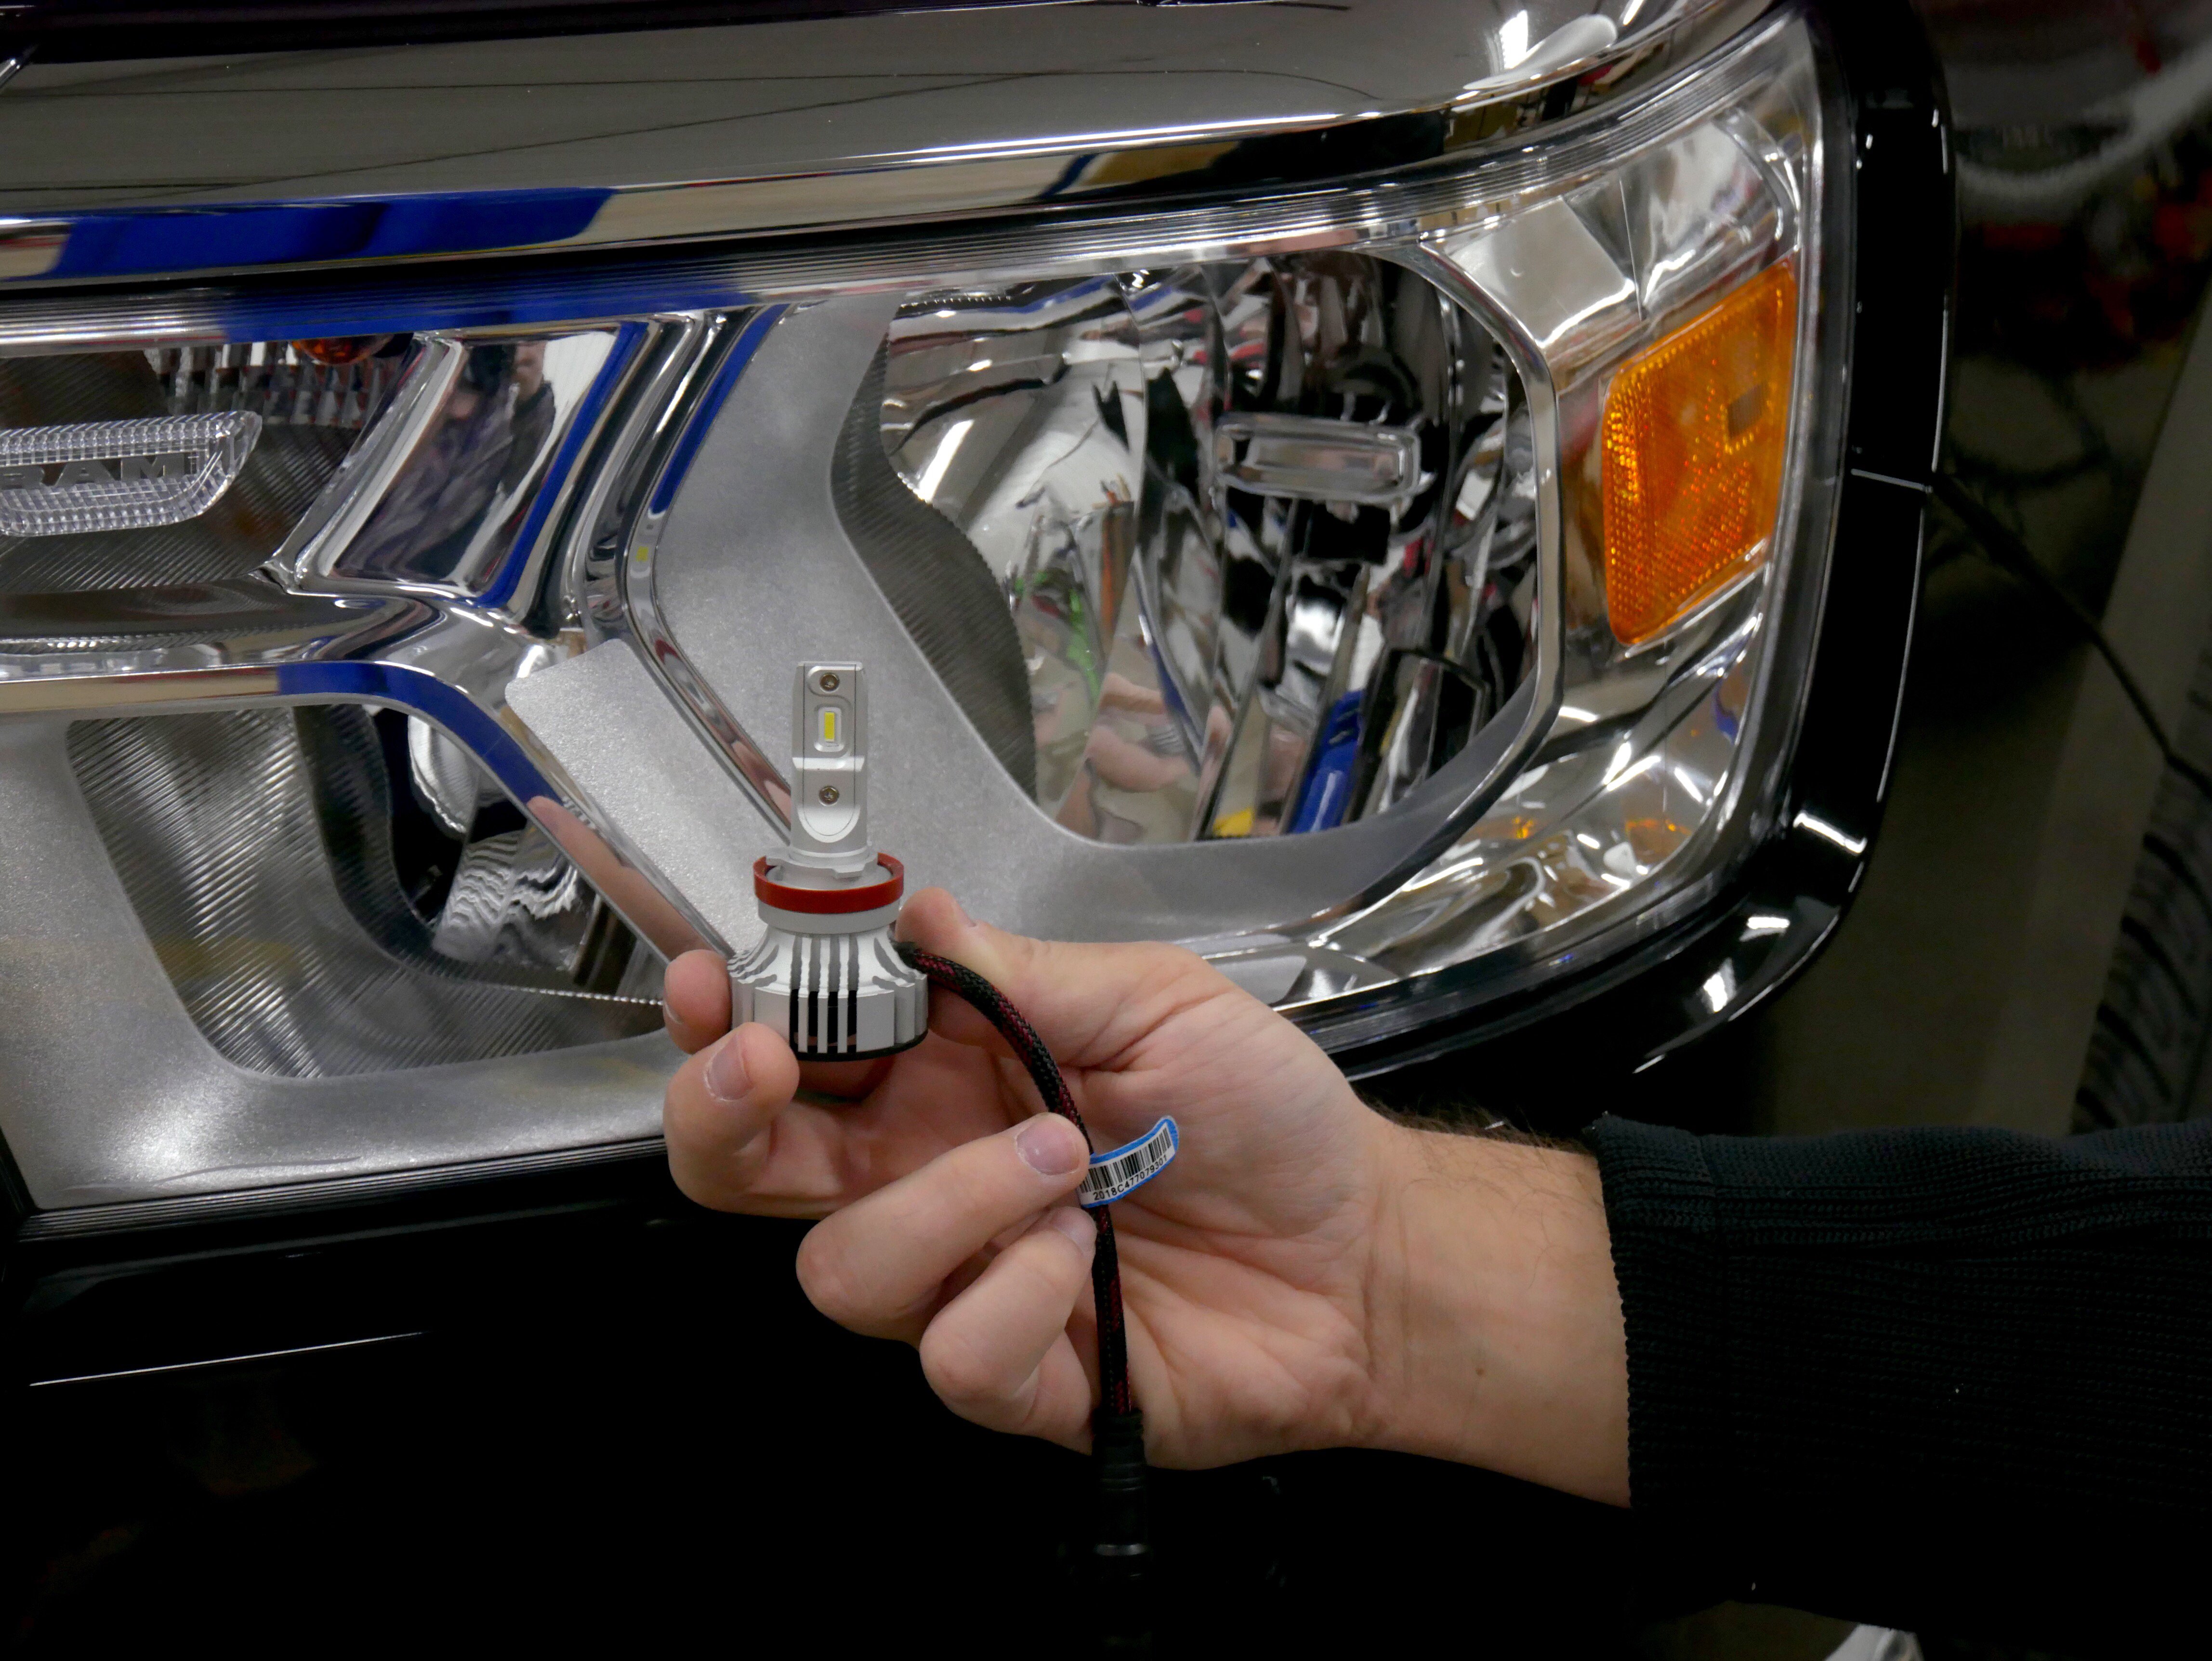 2019 Ram LED Headlight Bulb Buyer's Guide 10 Best Bulbs for Reflector